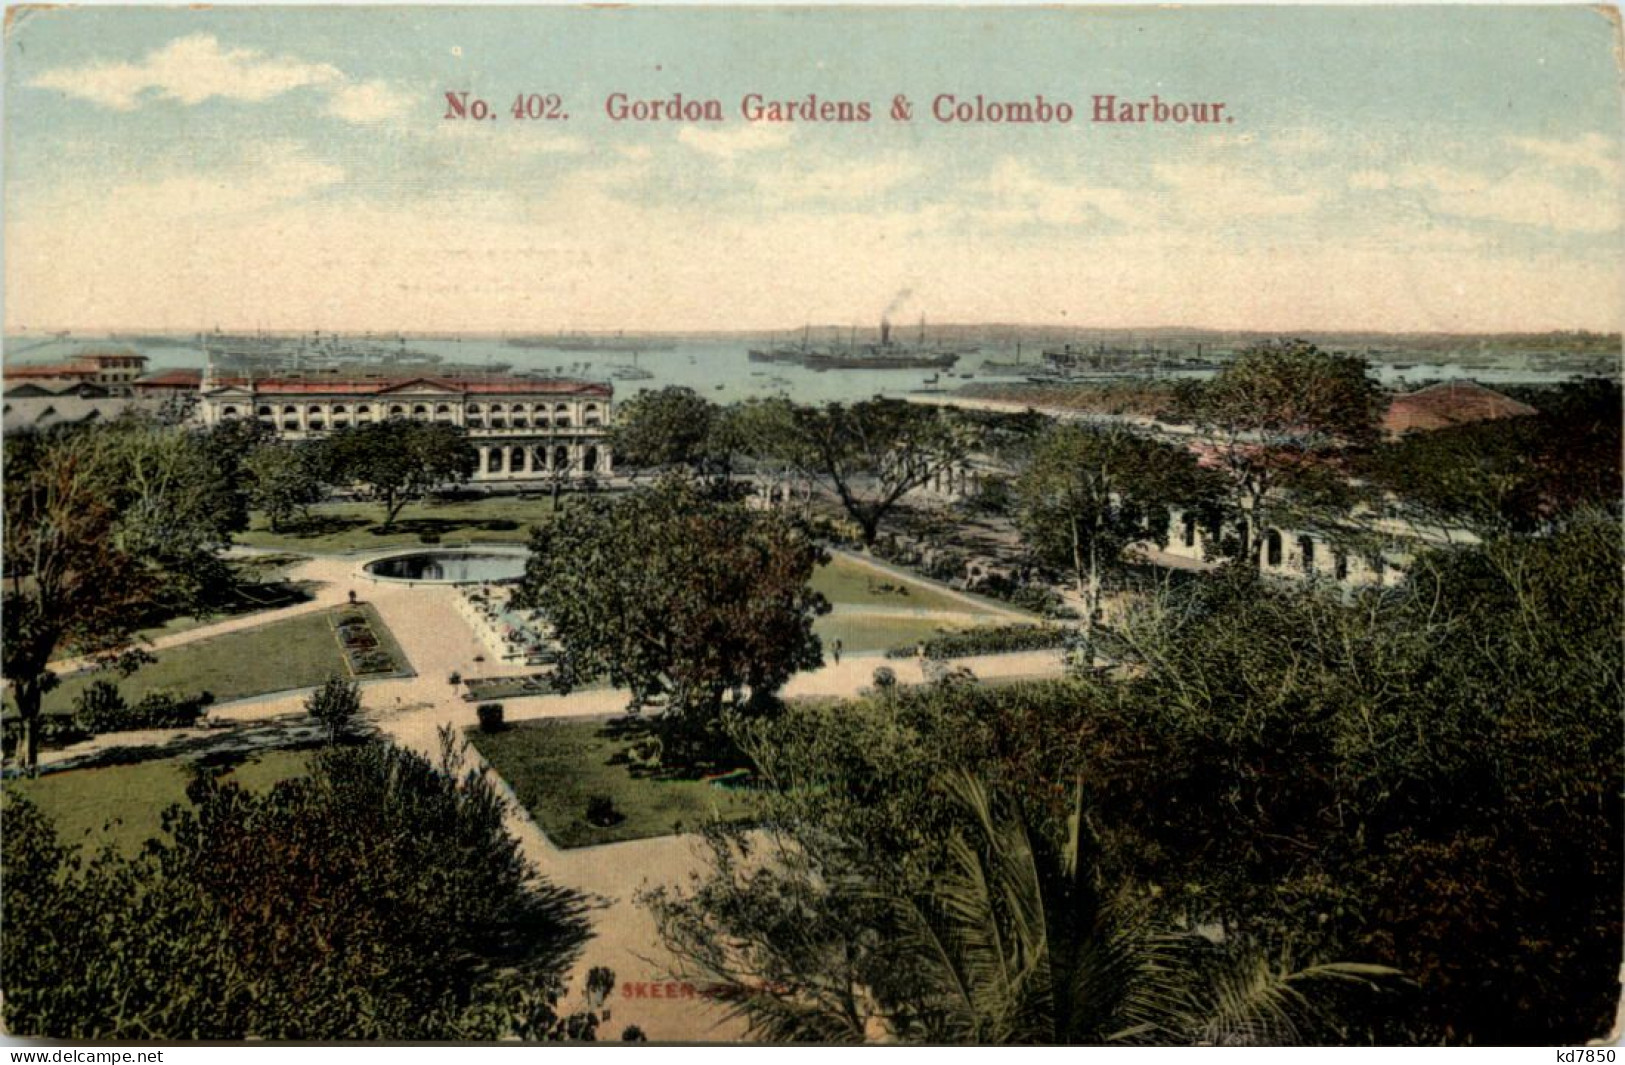 Gordon Gardens & Colombo Harbour - Sri Lanka (Ceylon)